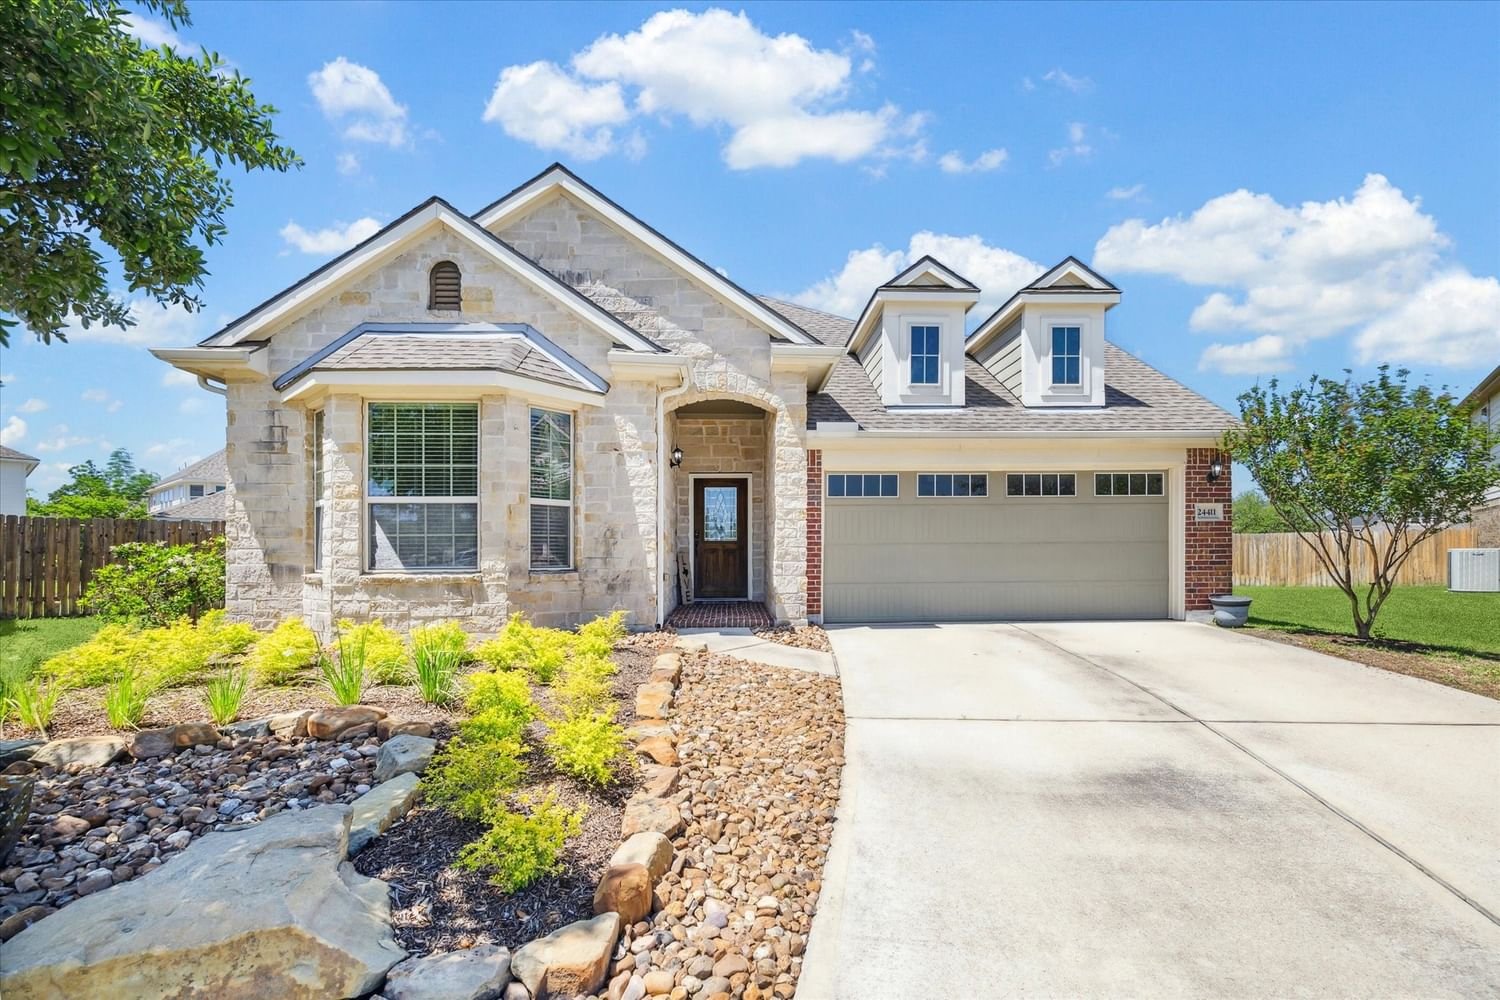 Real estate property located at 24411 Pine Canyon Falls, Harris, Wimbledon Falls Sec 4, Tomball, TX, US